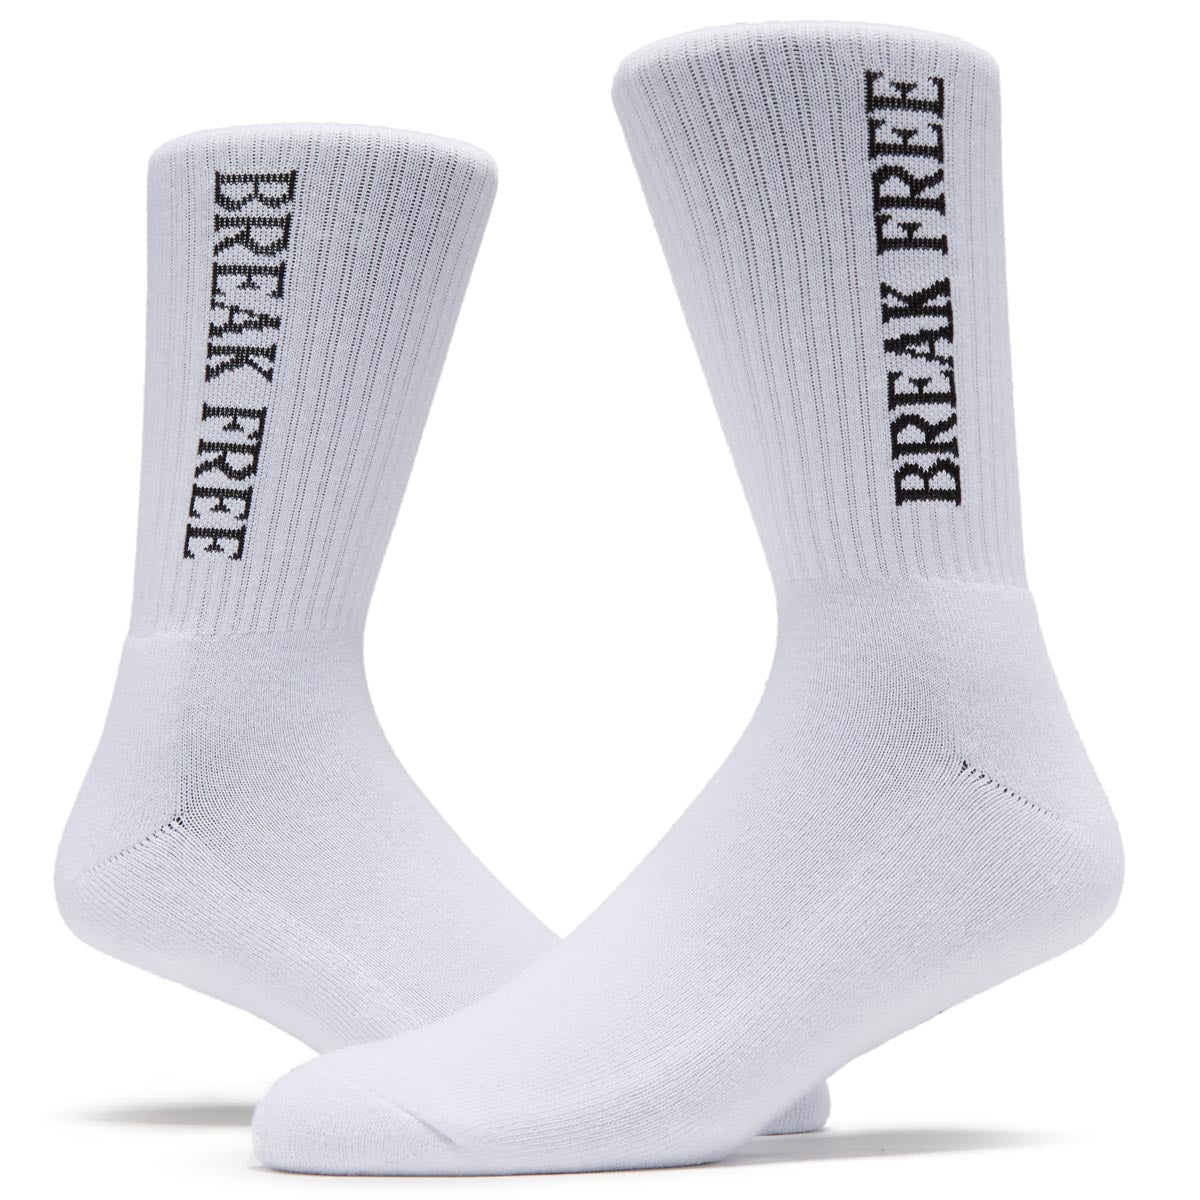 Last Resort AB Break Free Socks - White/Black image 2